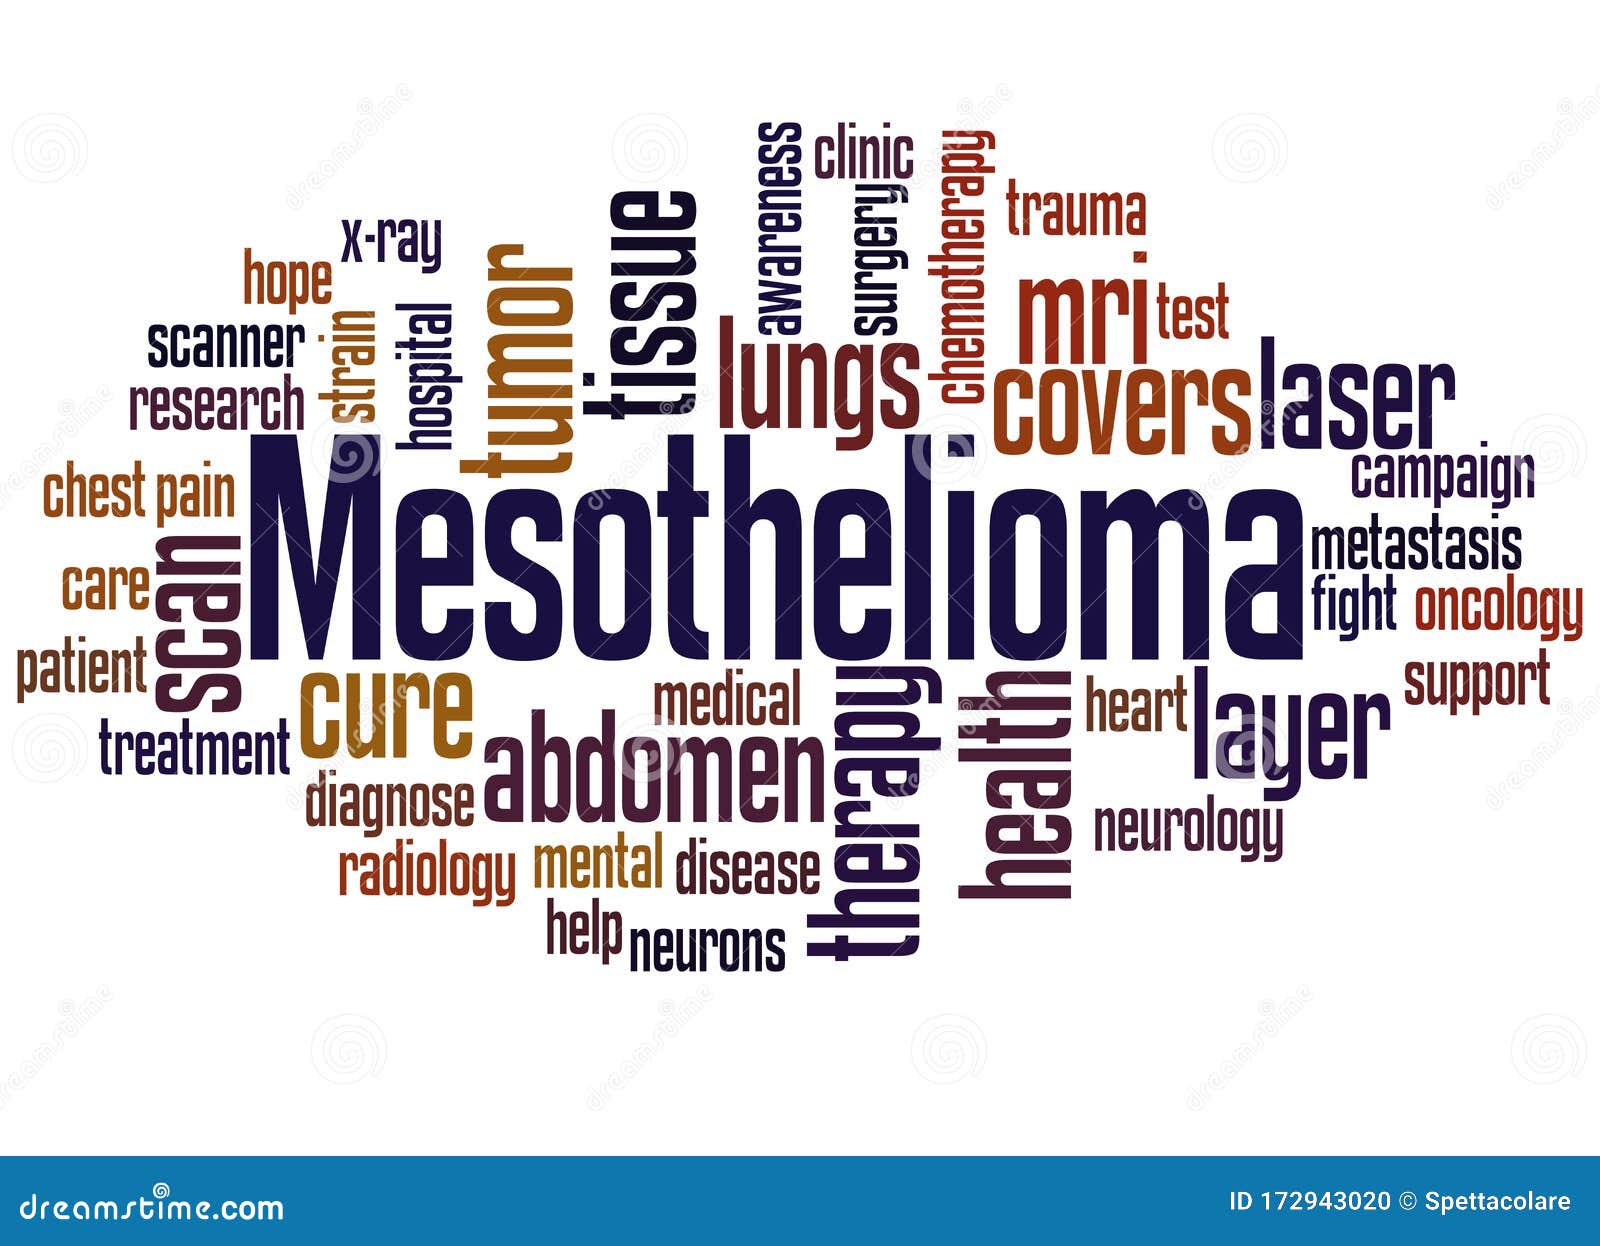 malignant mesothelioma association